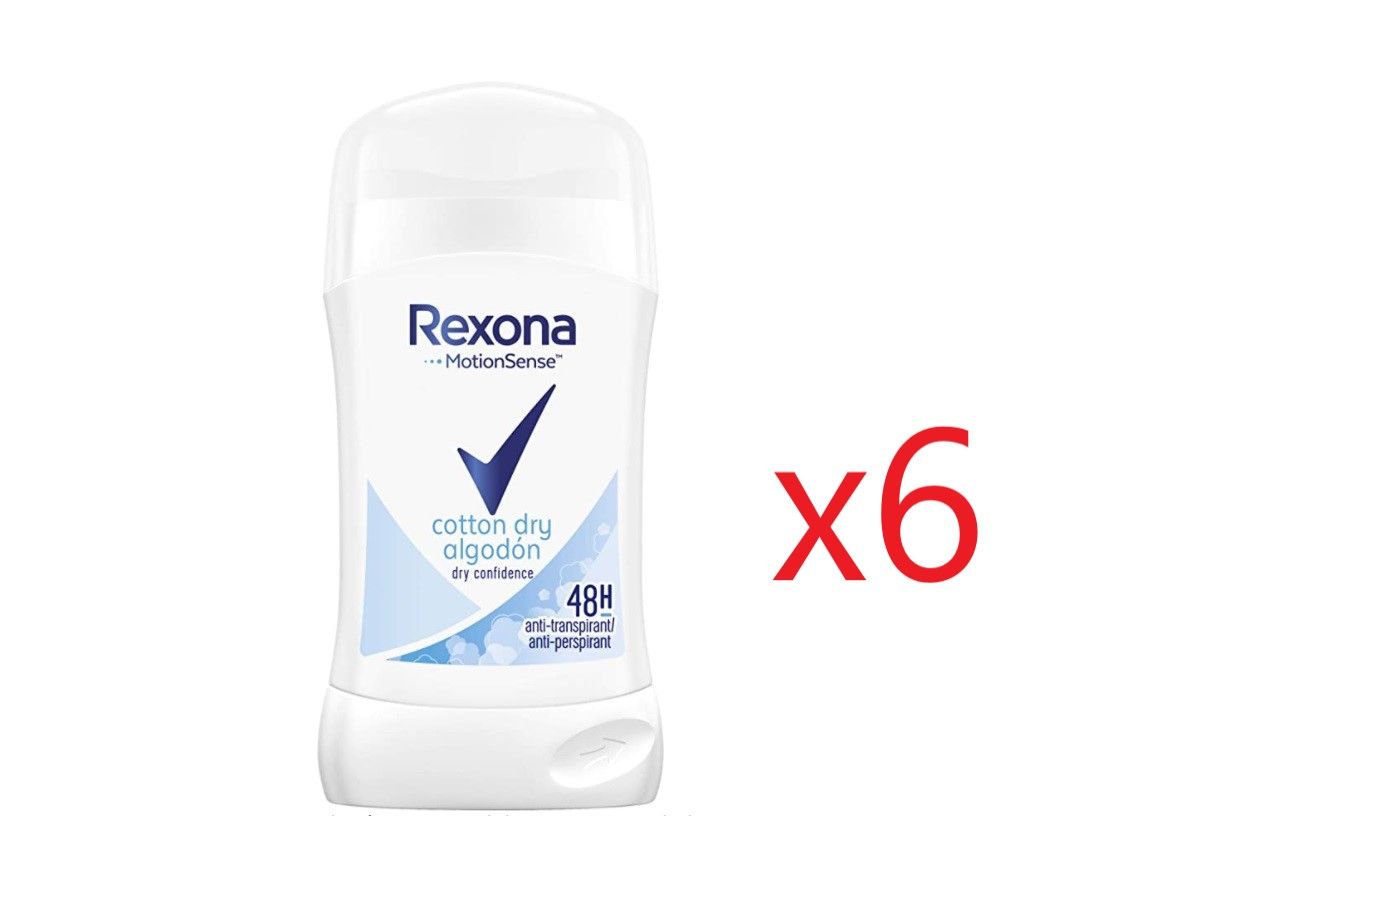 ¡Chollo! Pack de 6 desodorantes Rexona Cotton dry algodón por sólo 11,50€ (antes 19,50€)